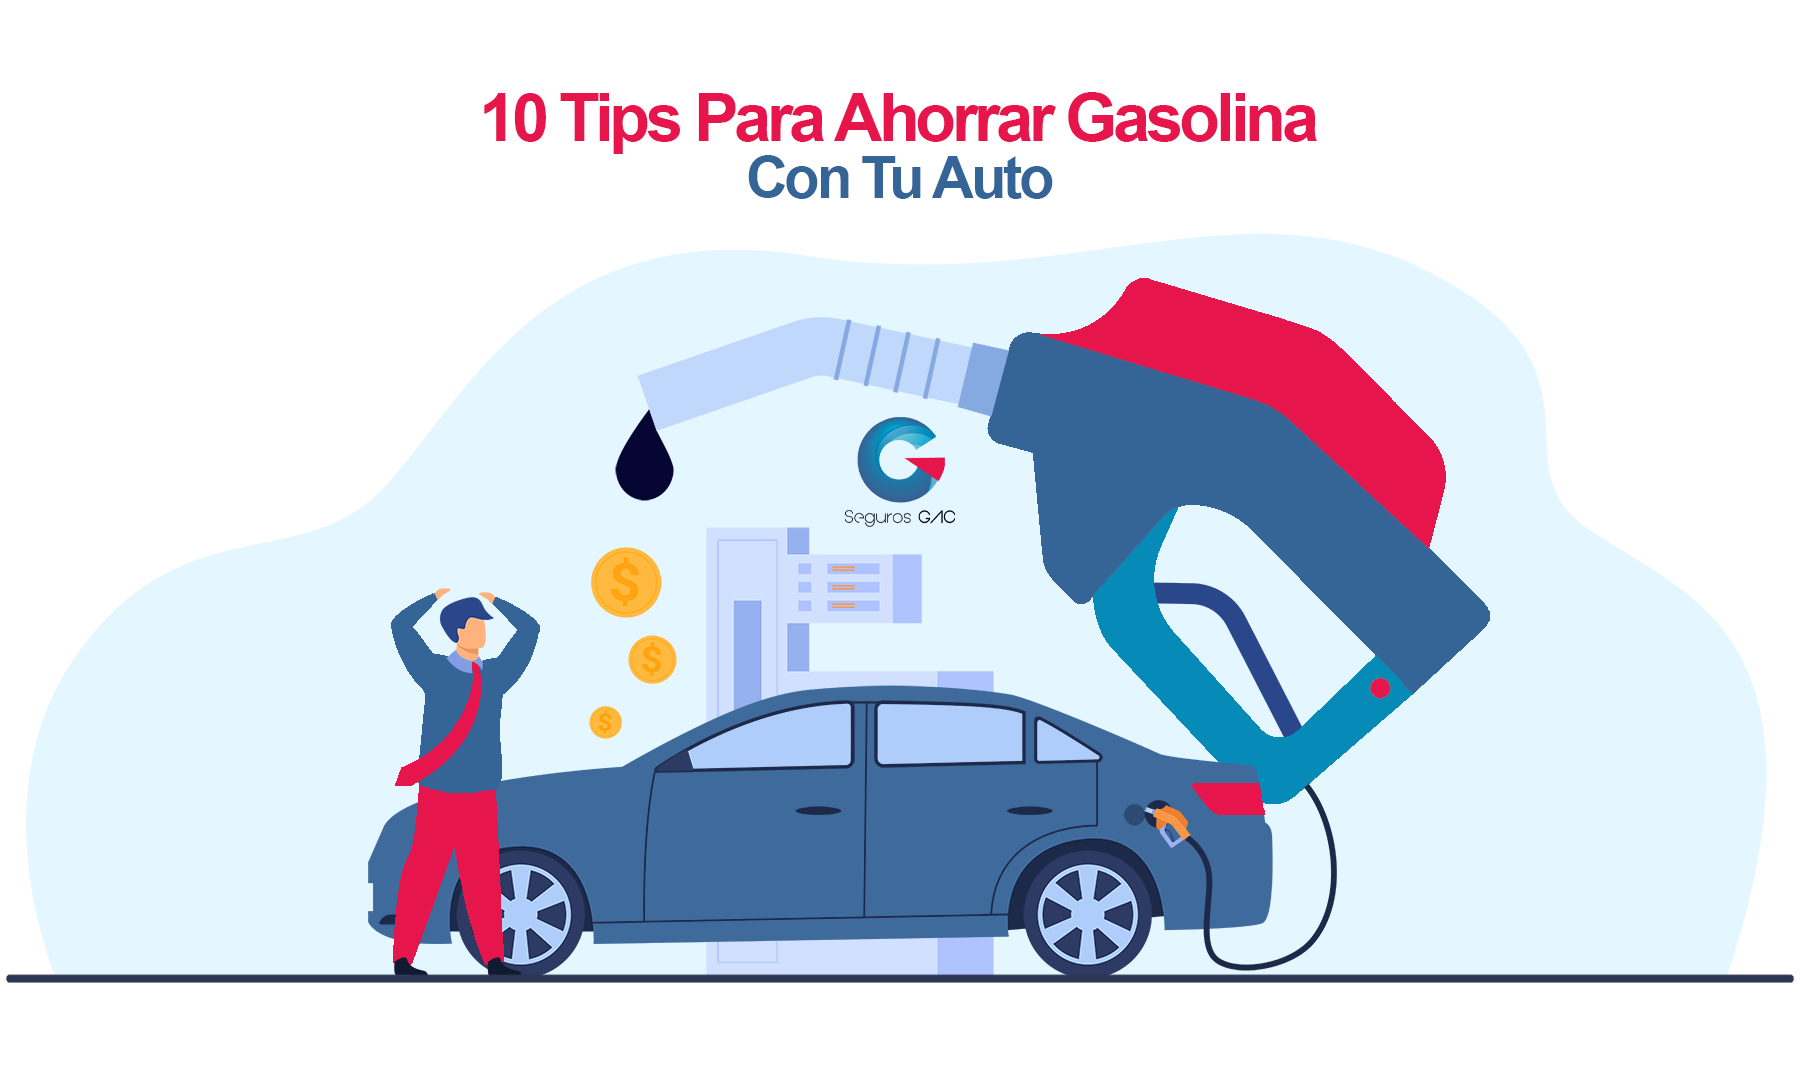 10 Tips Para Ahorrar Gasolina